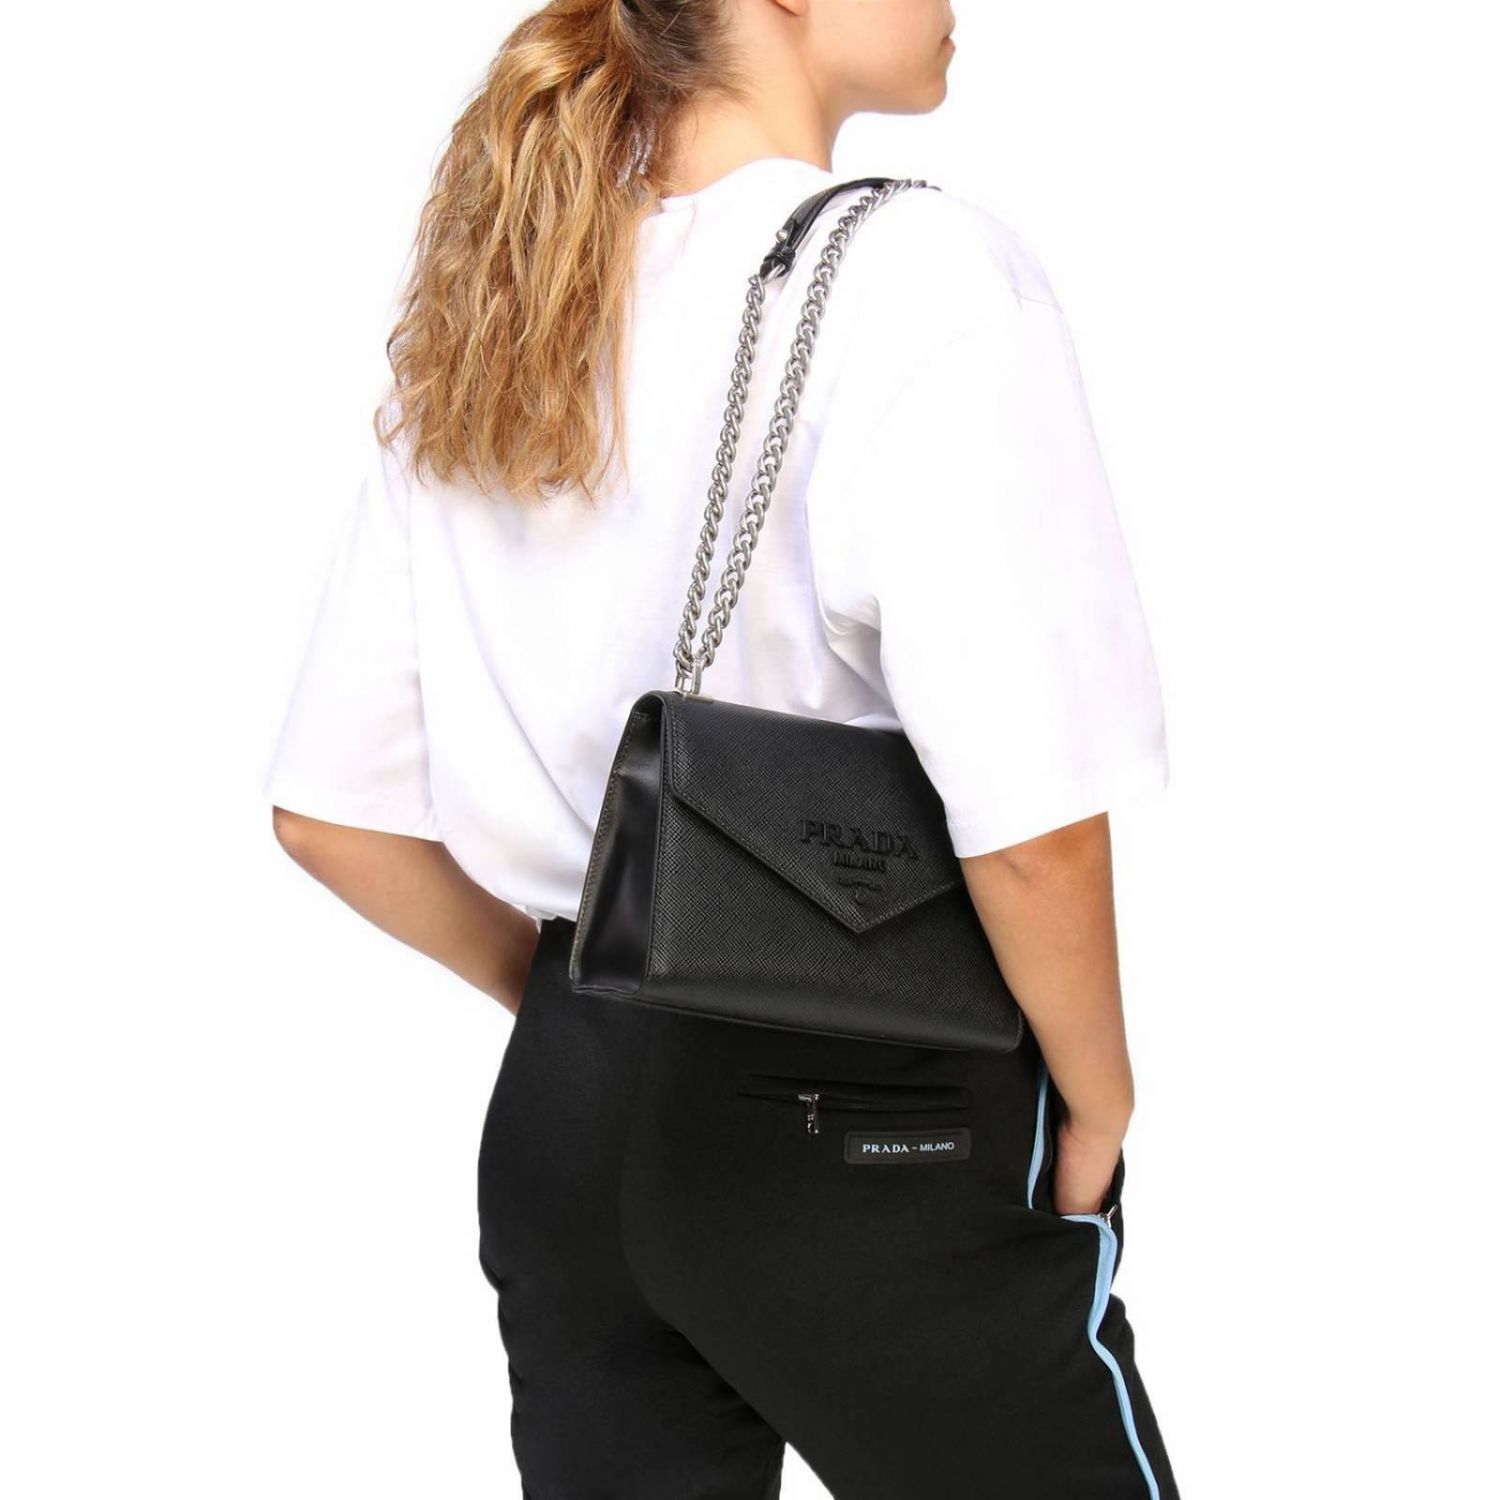 prada monochrome saffiano leather chain shoulder bag